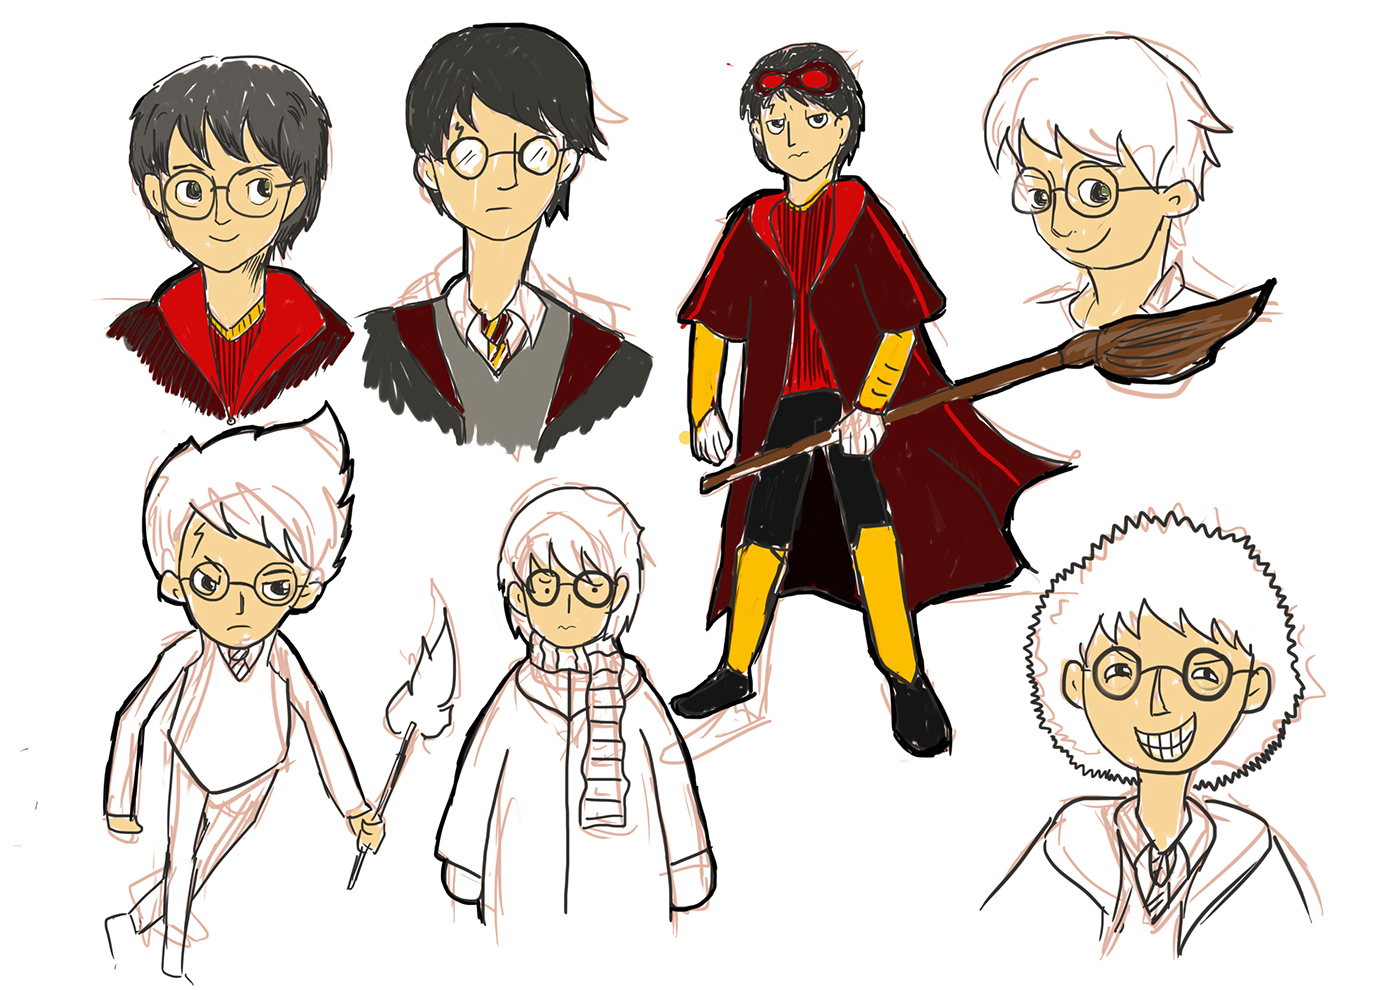 Harry Potter cartoon's characters on Behance